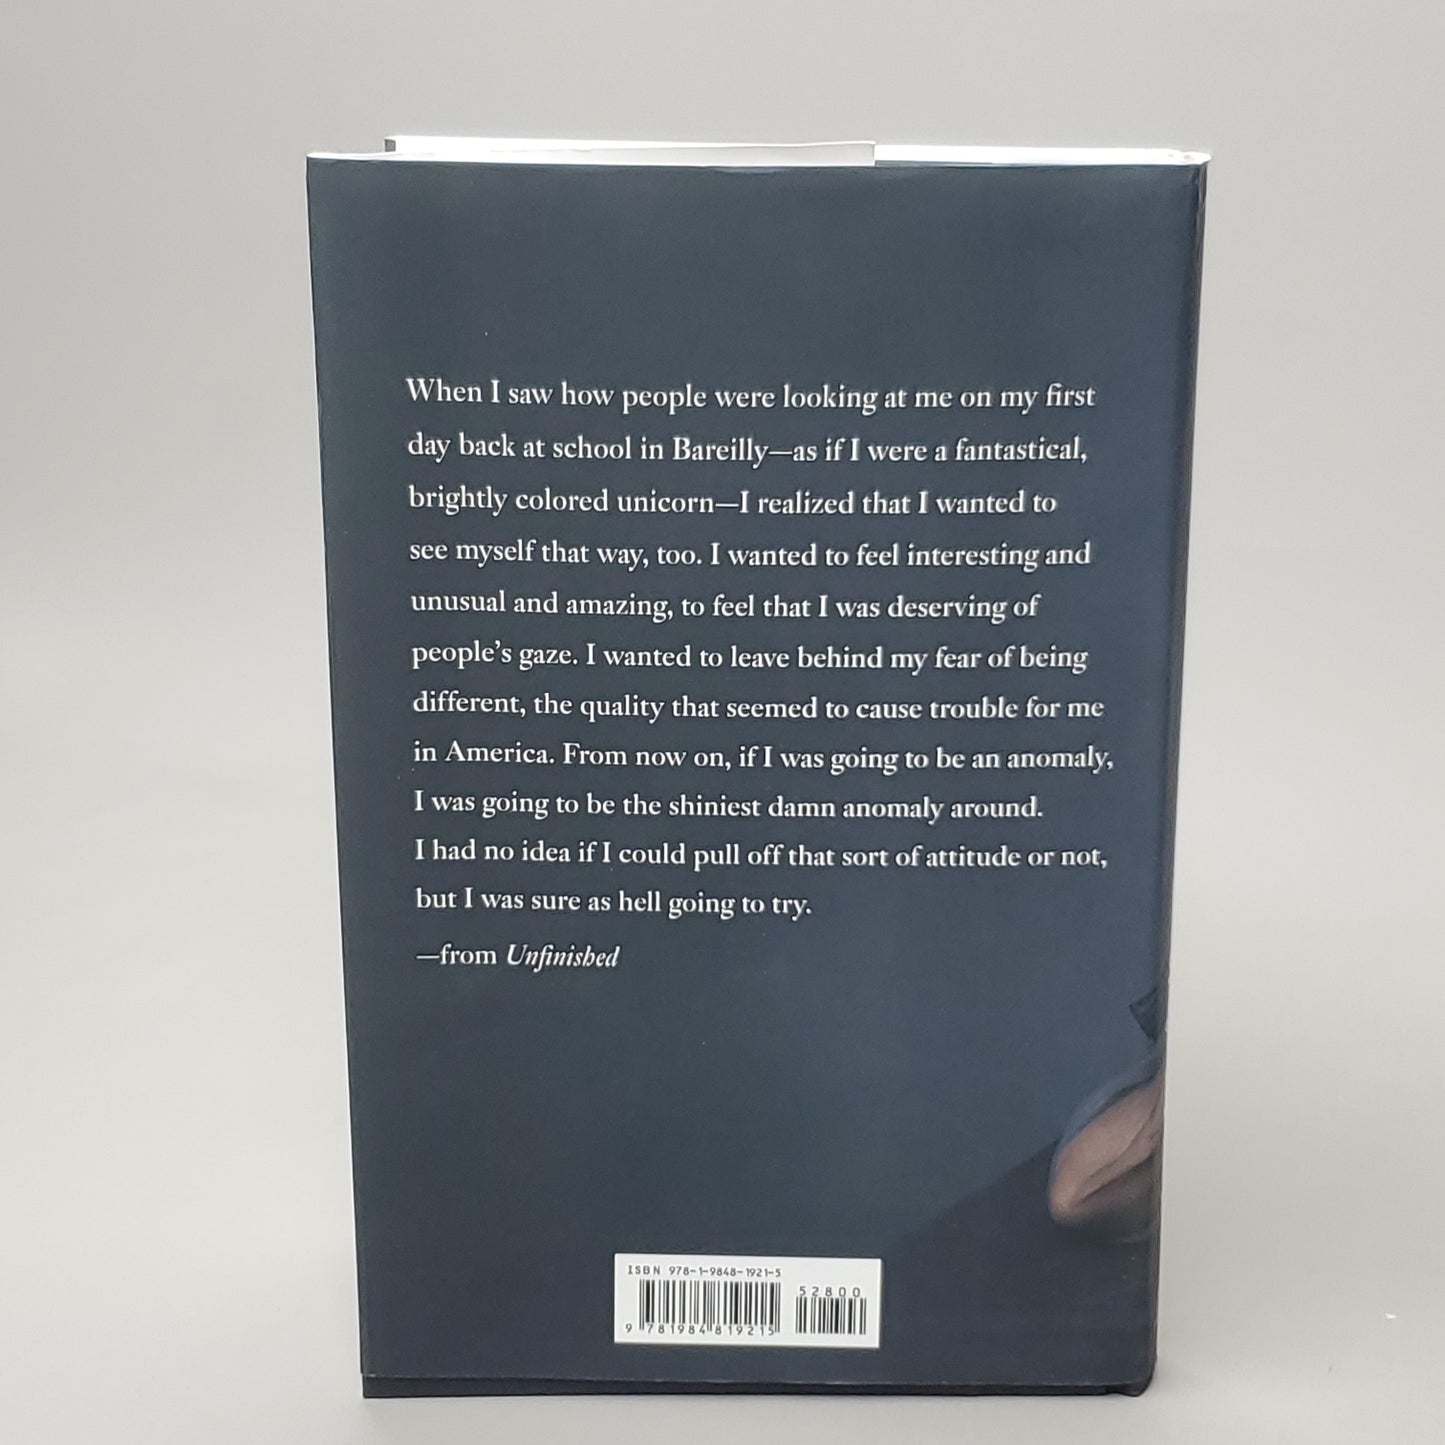 UNFINISHED A Memoir by Priyanka Chopra Jonas Book Hardback (New)